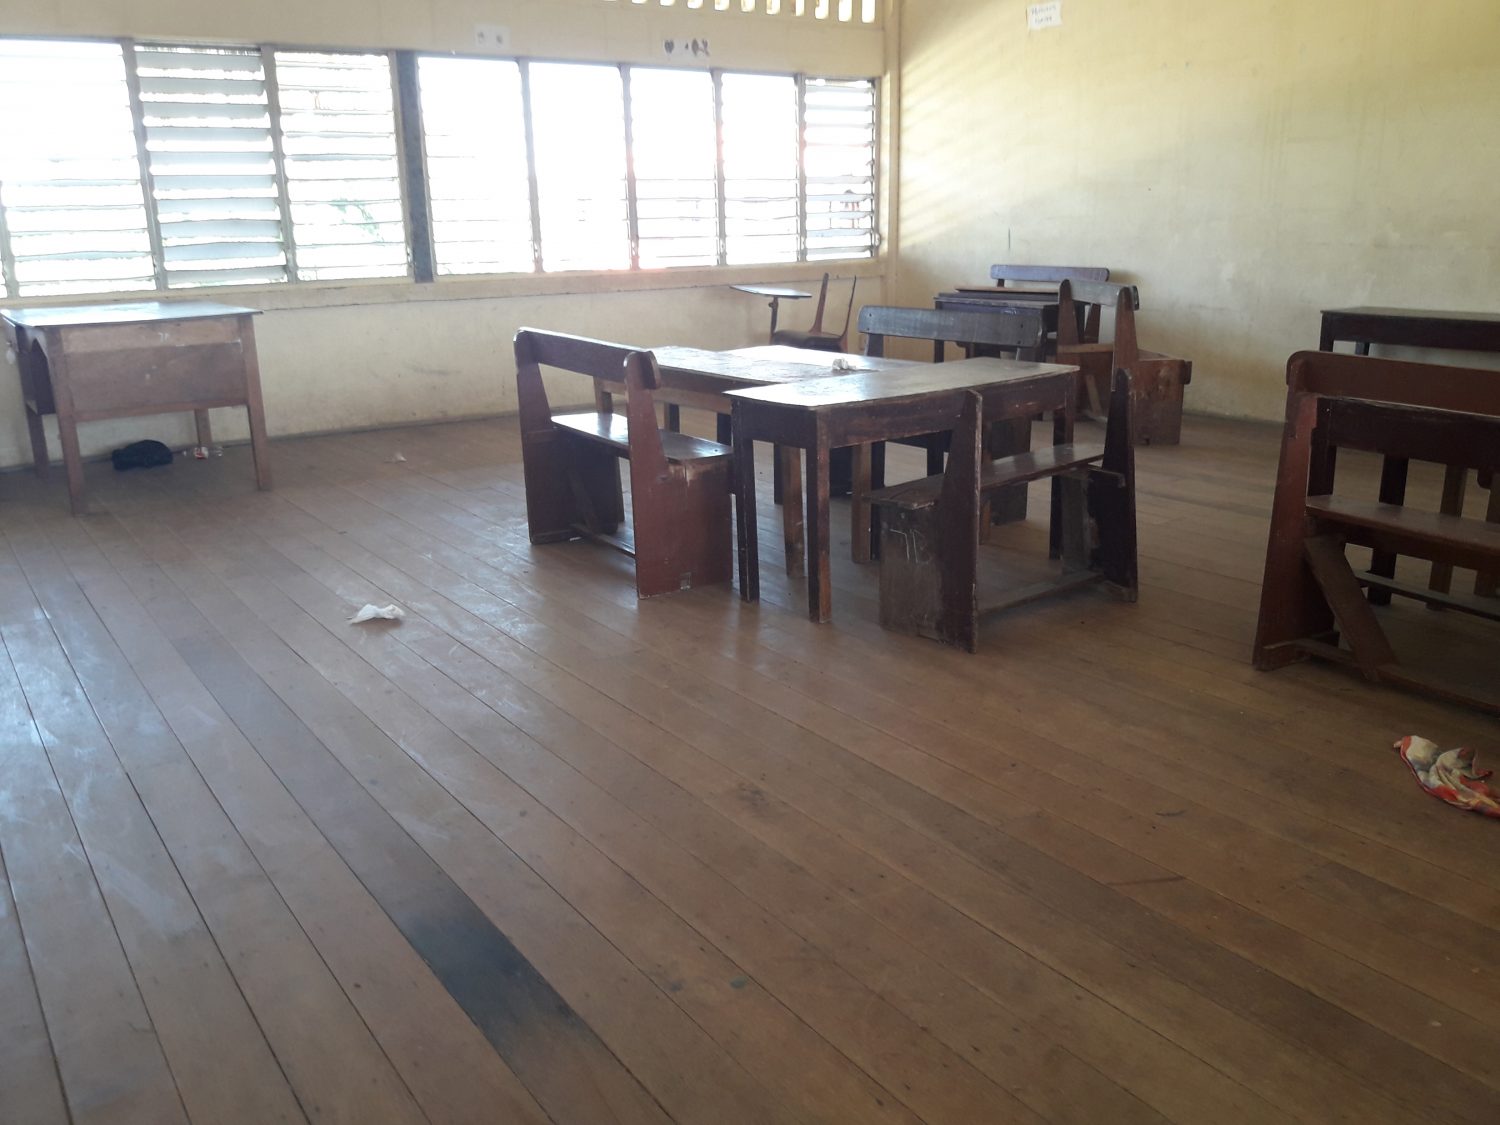 An abandoned classroom